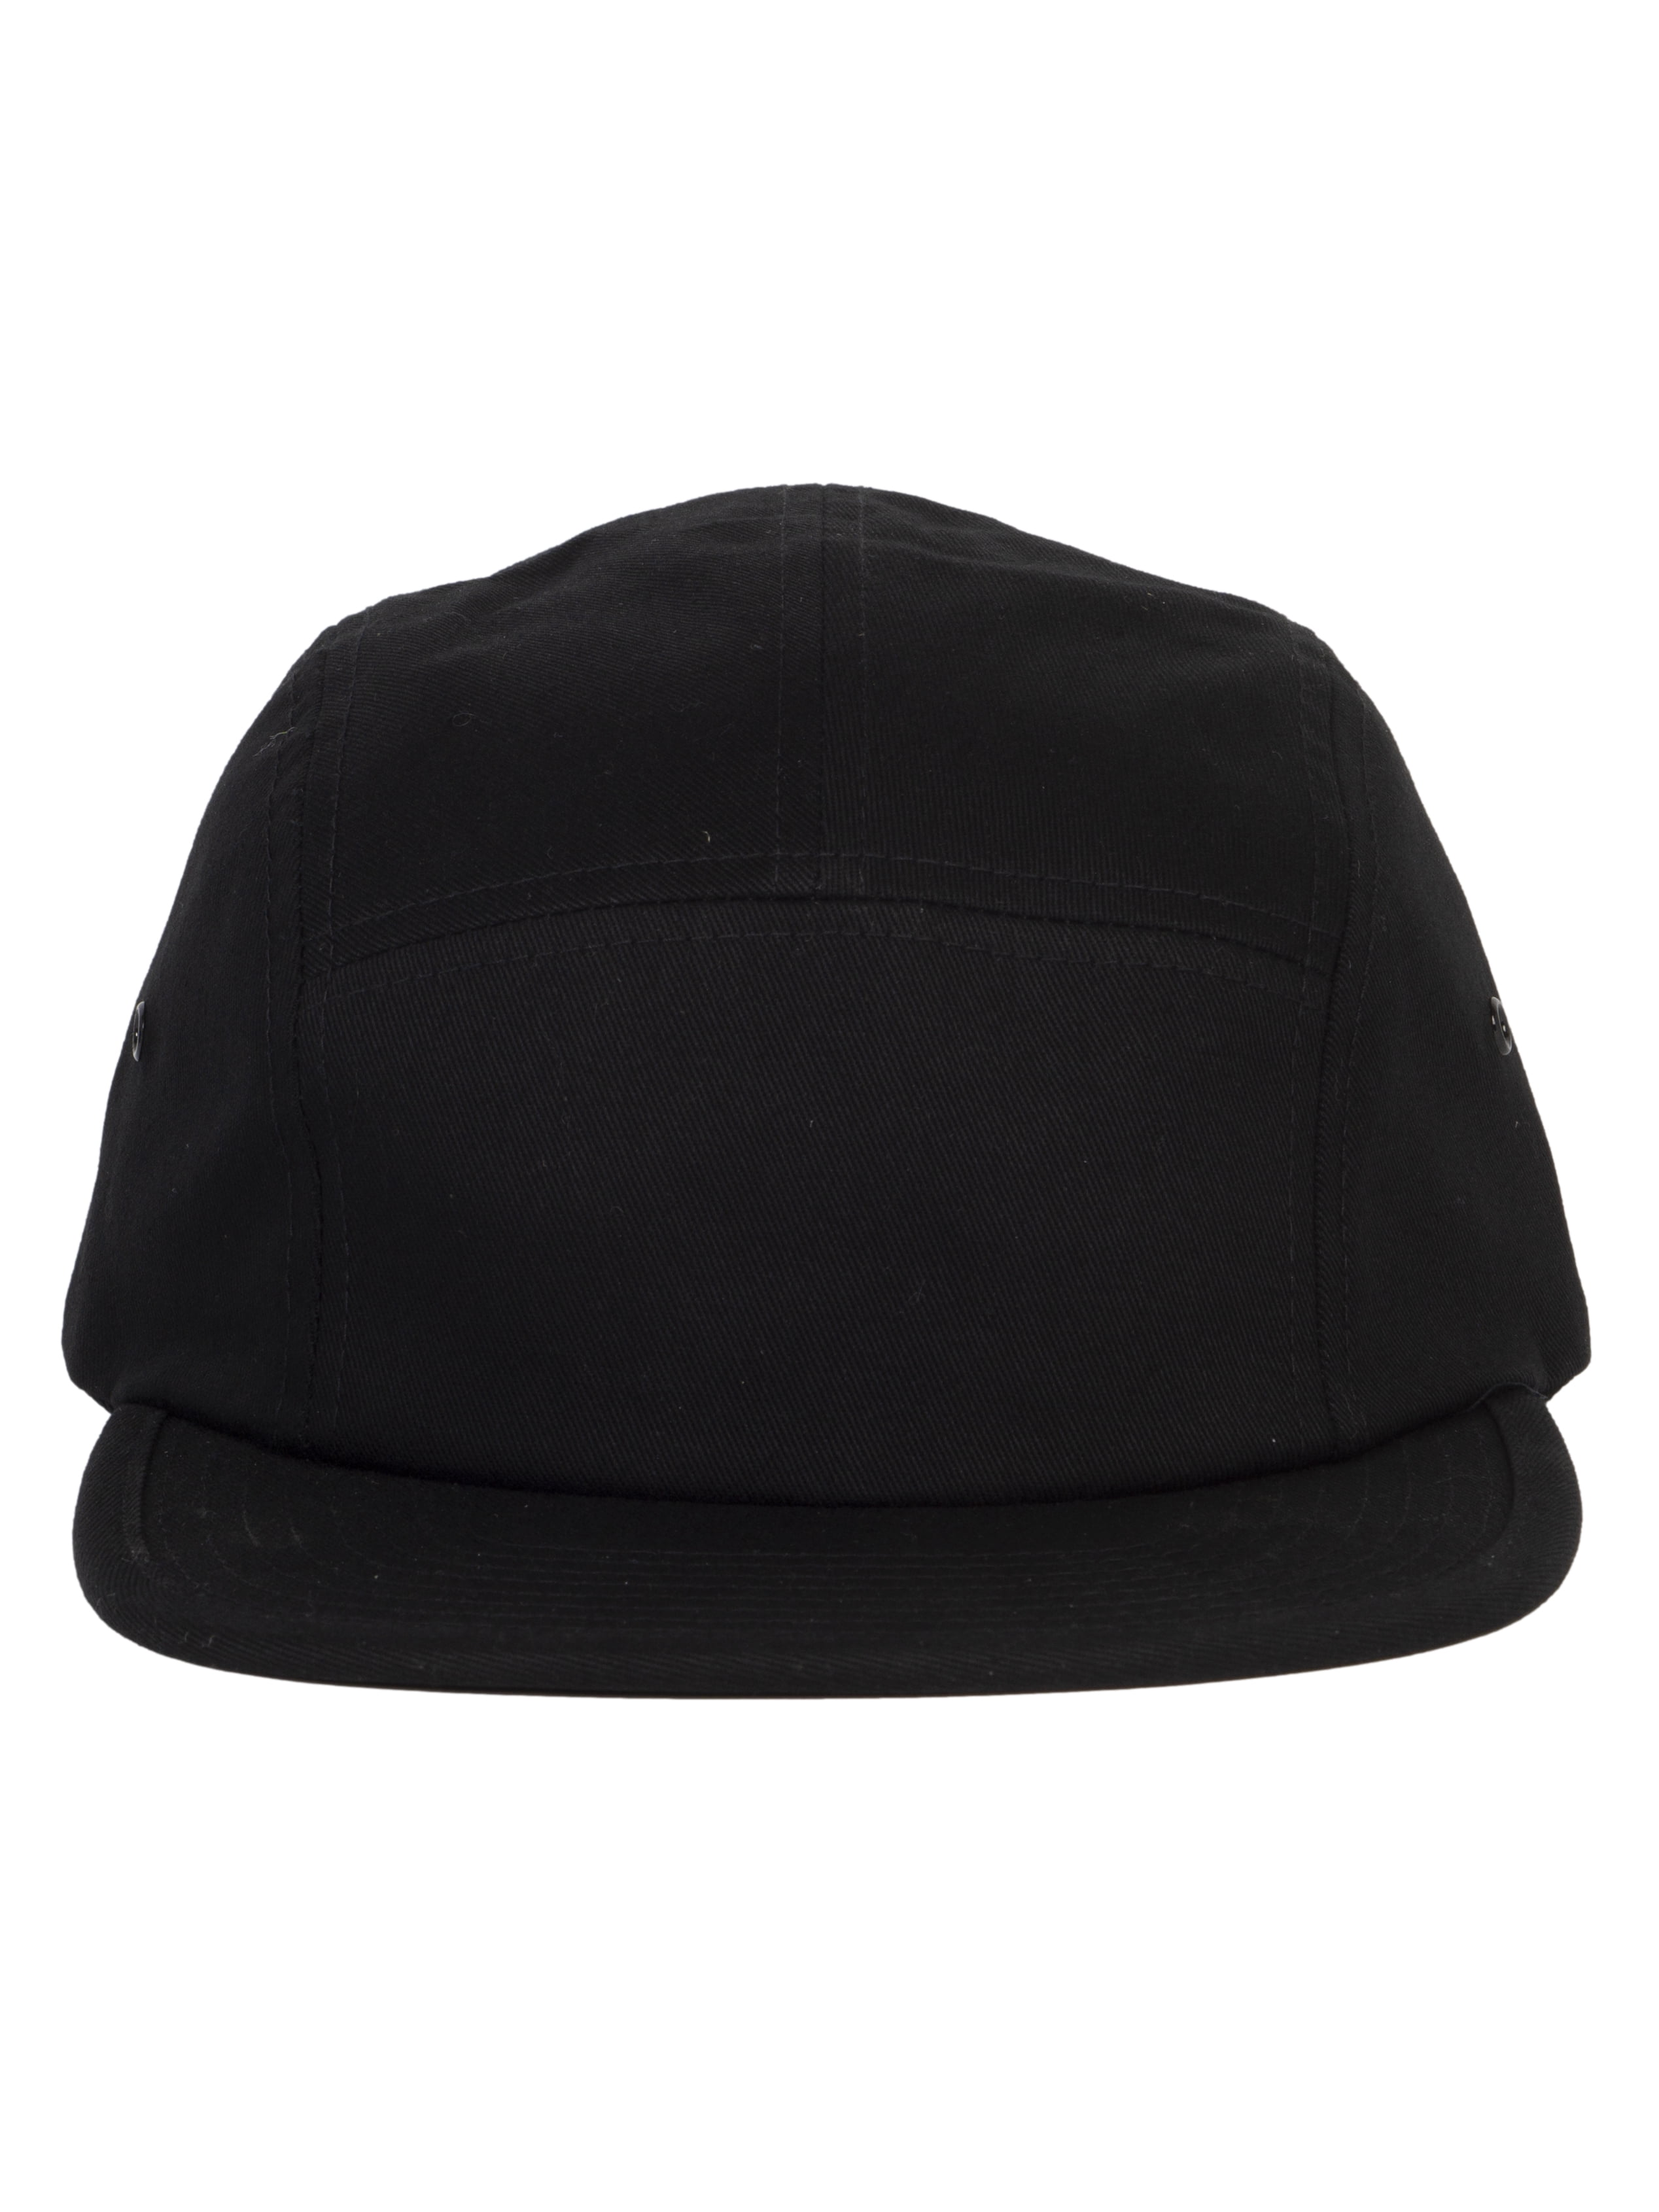 Jockey Bill Baseball Black Classic Flat Hat Cap Headwear 5 Top For Panel Men